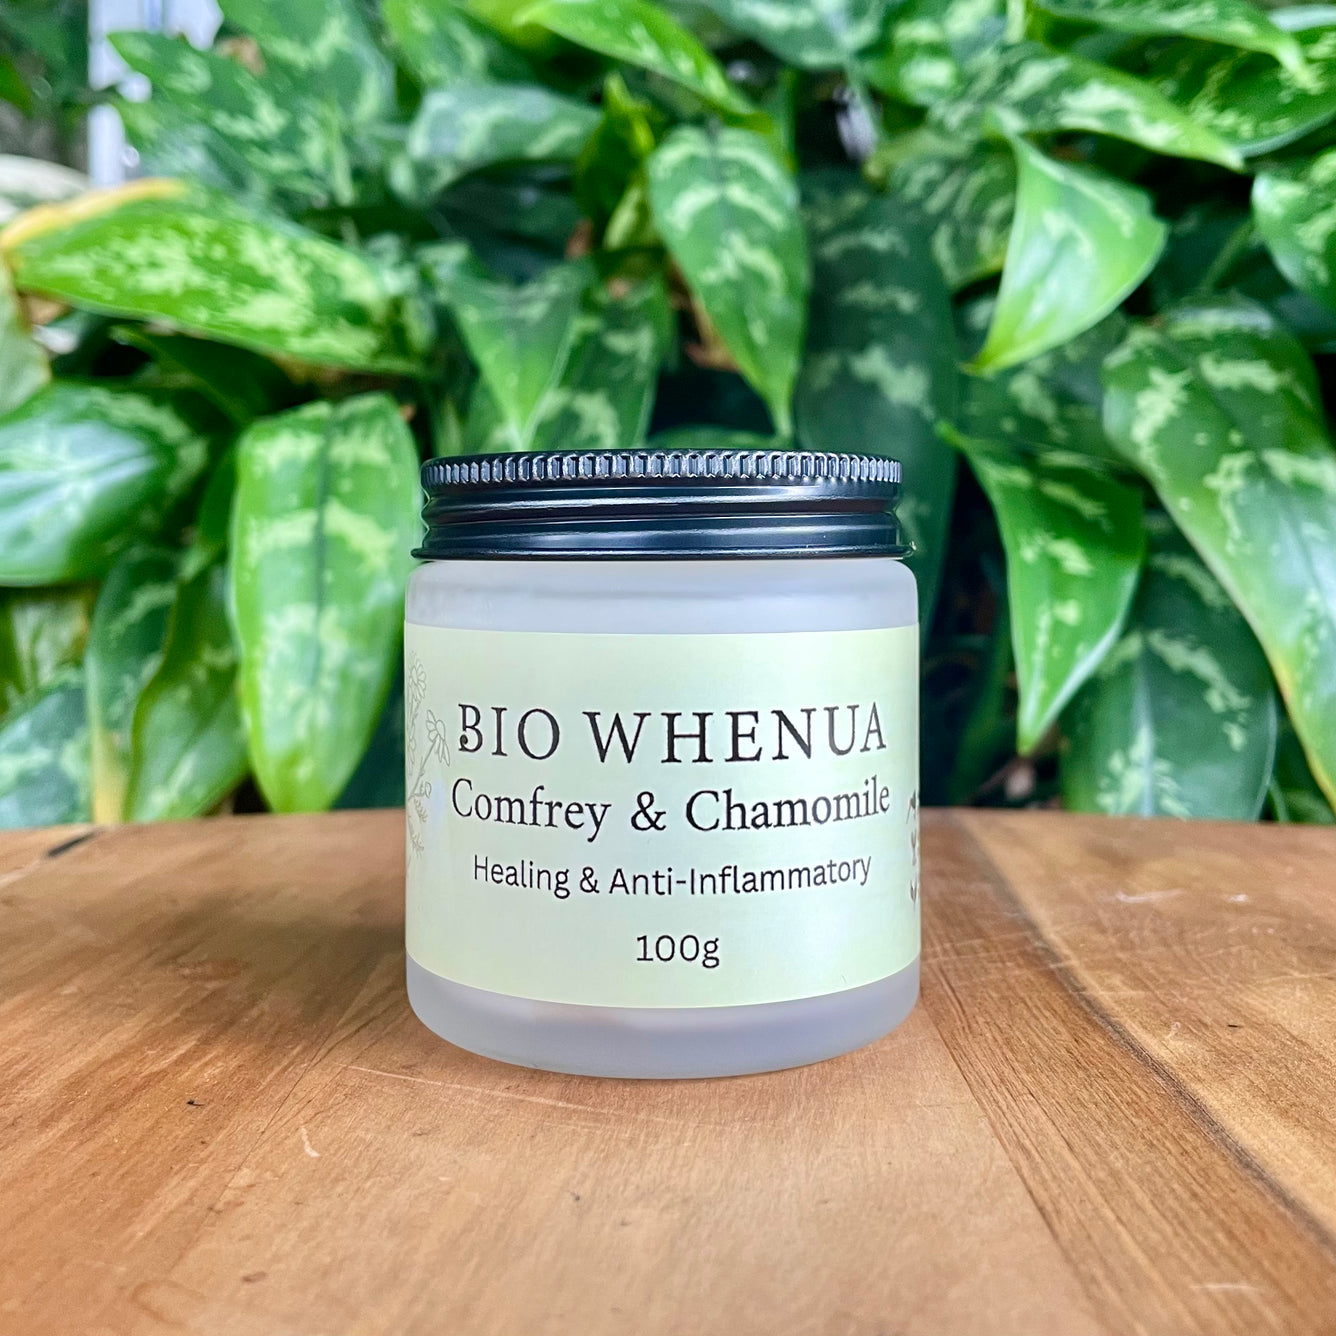 Bio Whenua Comfrey & Chamomile Creme 100g